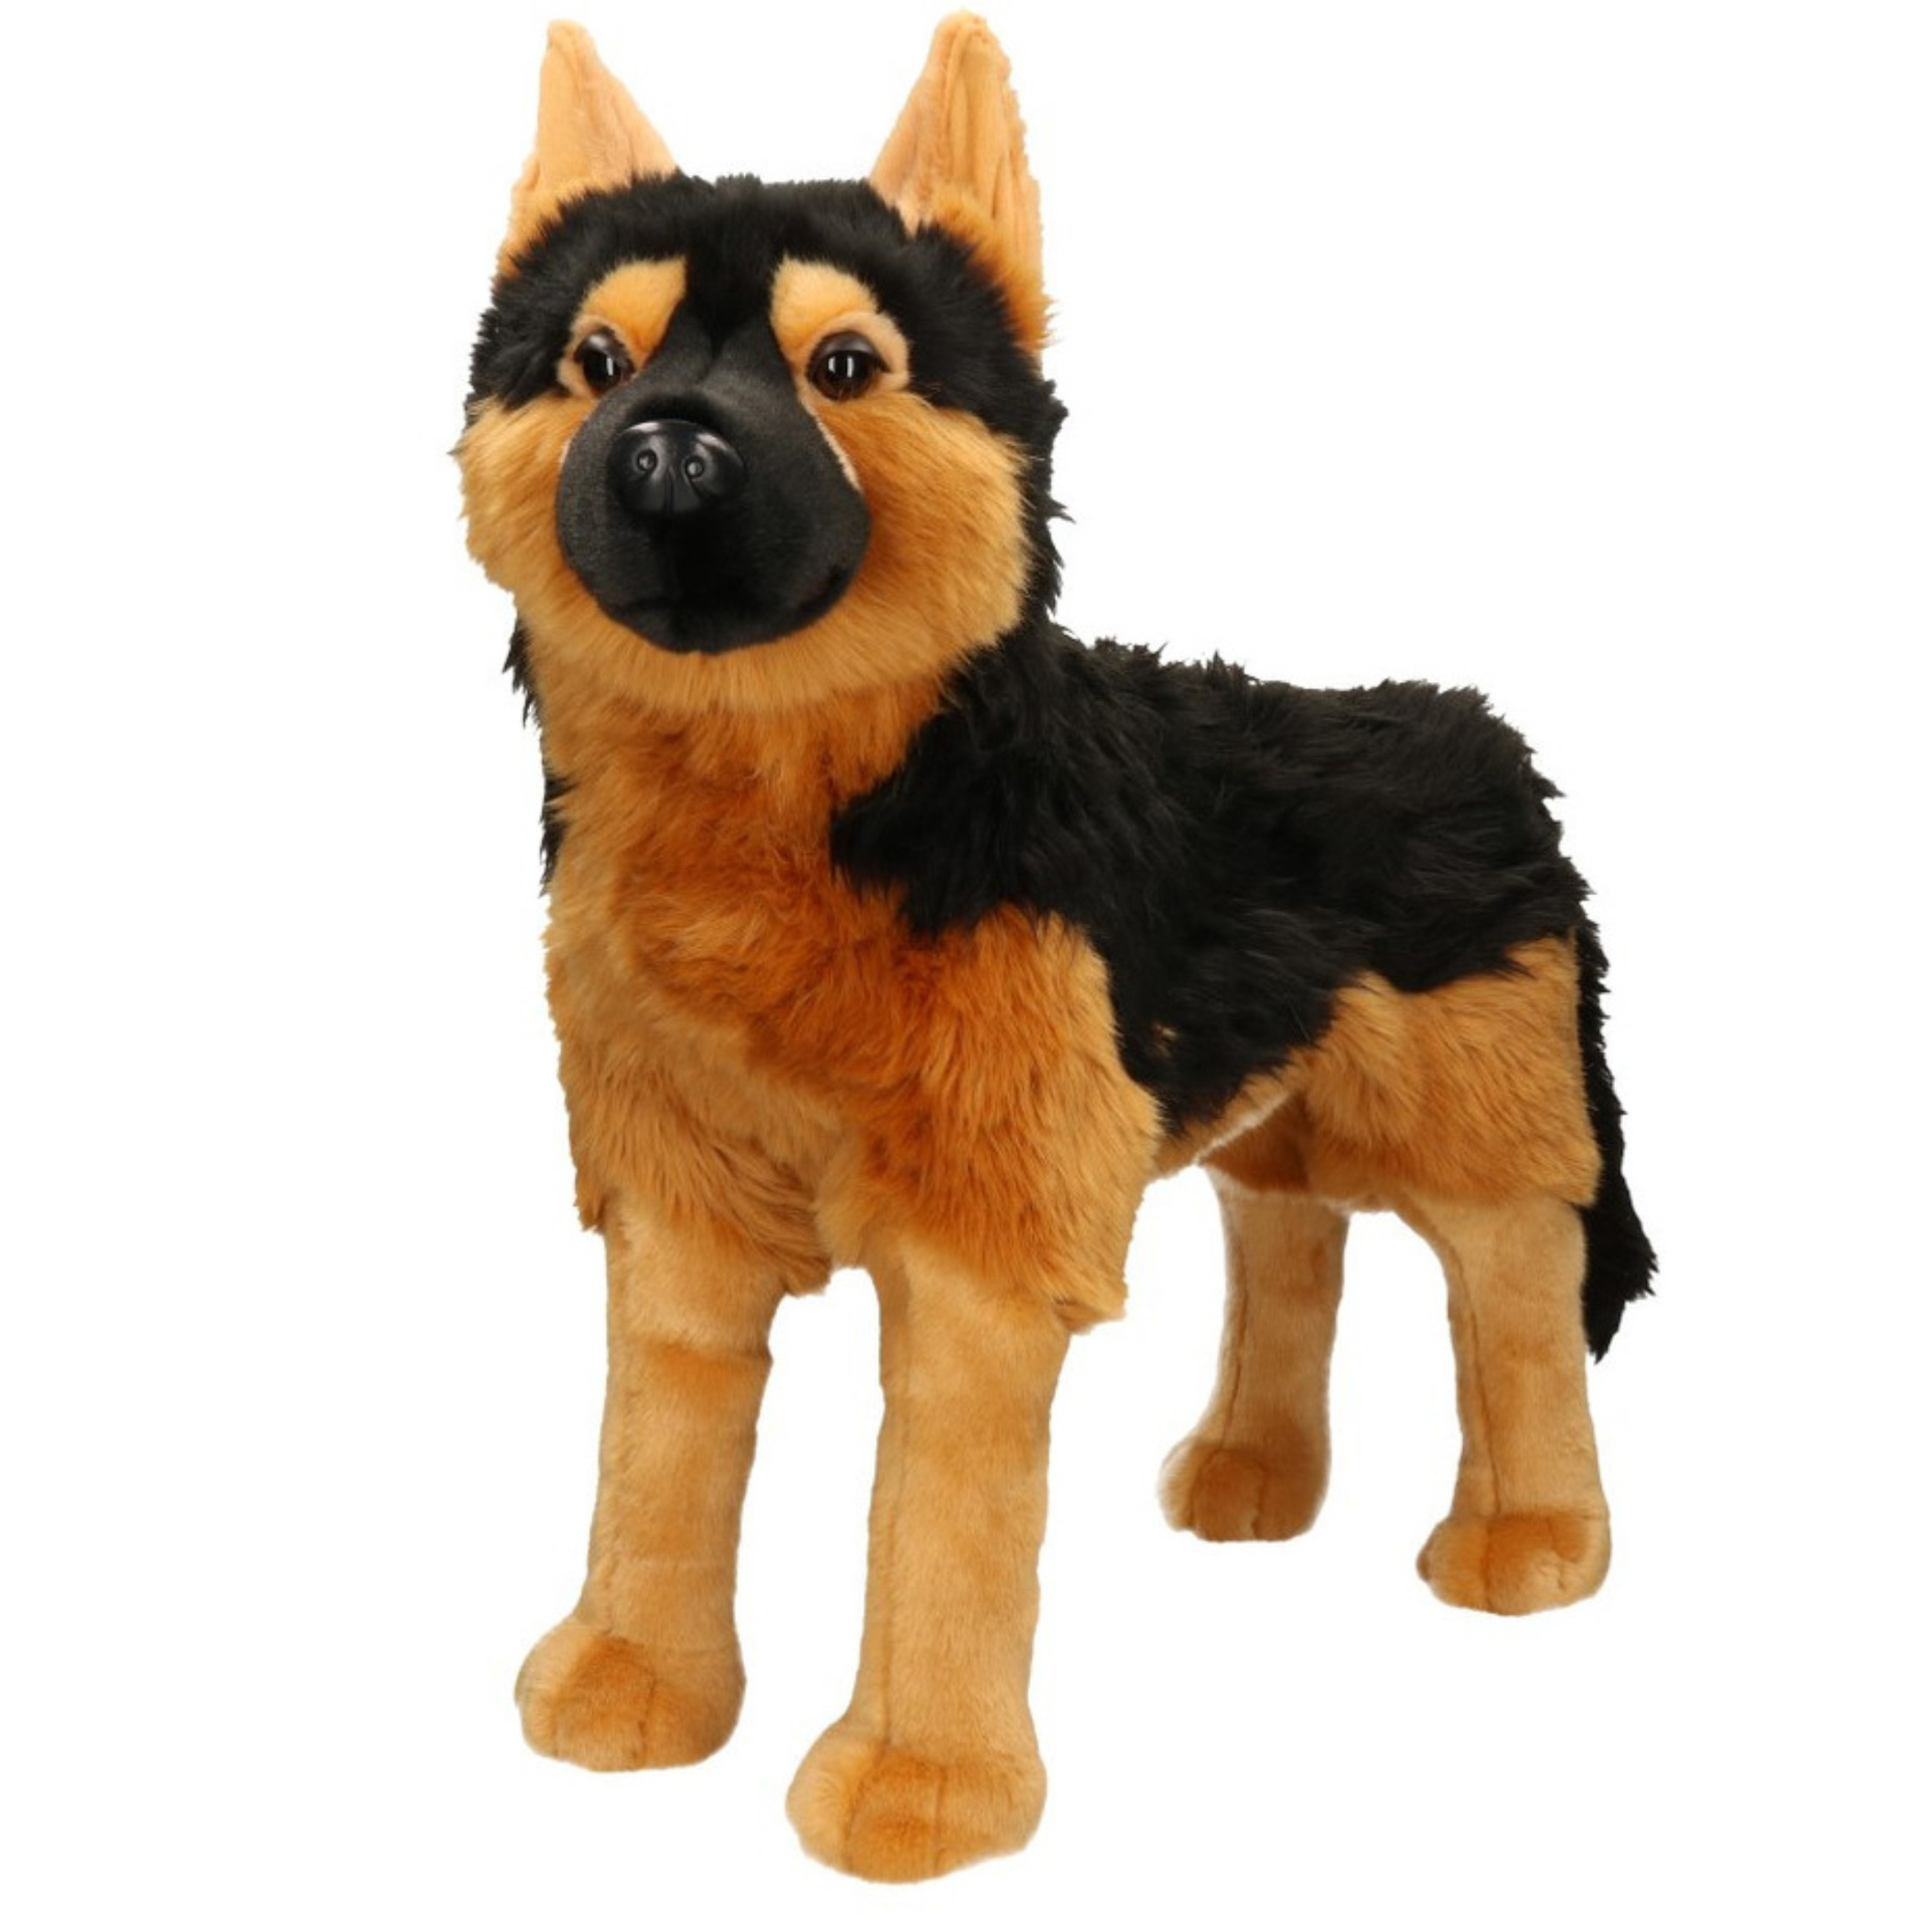 Verandert in exegese Zilver XL Knuffel Duitse Herder hond bruin/zwart 53 cm knuffels kopen -  Partyshopper Dieren knuffels winkel